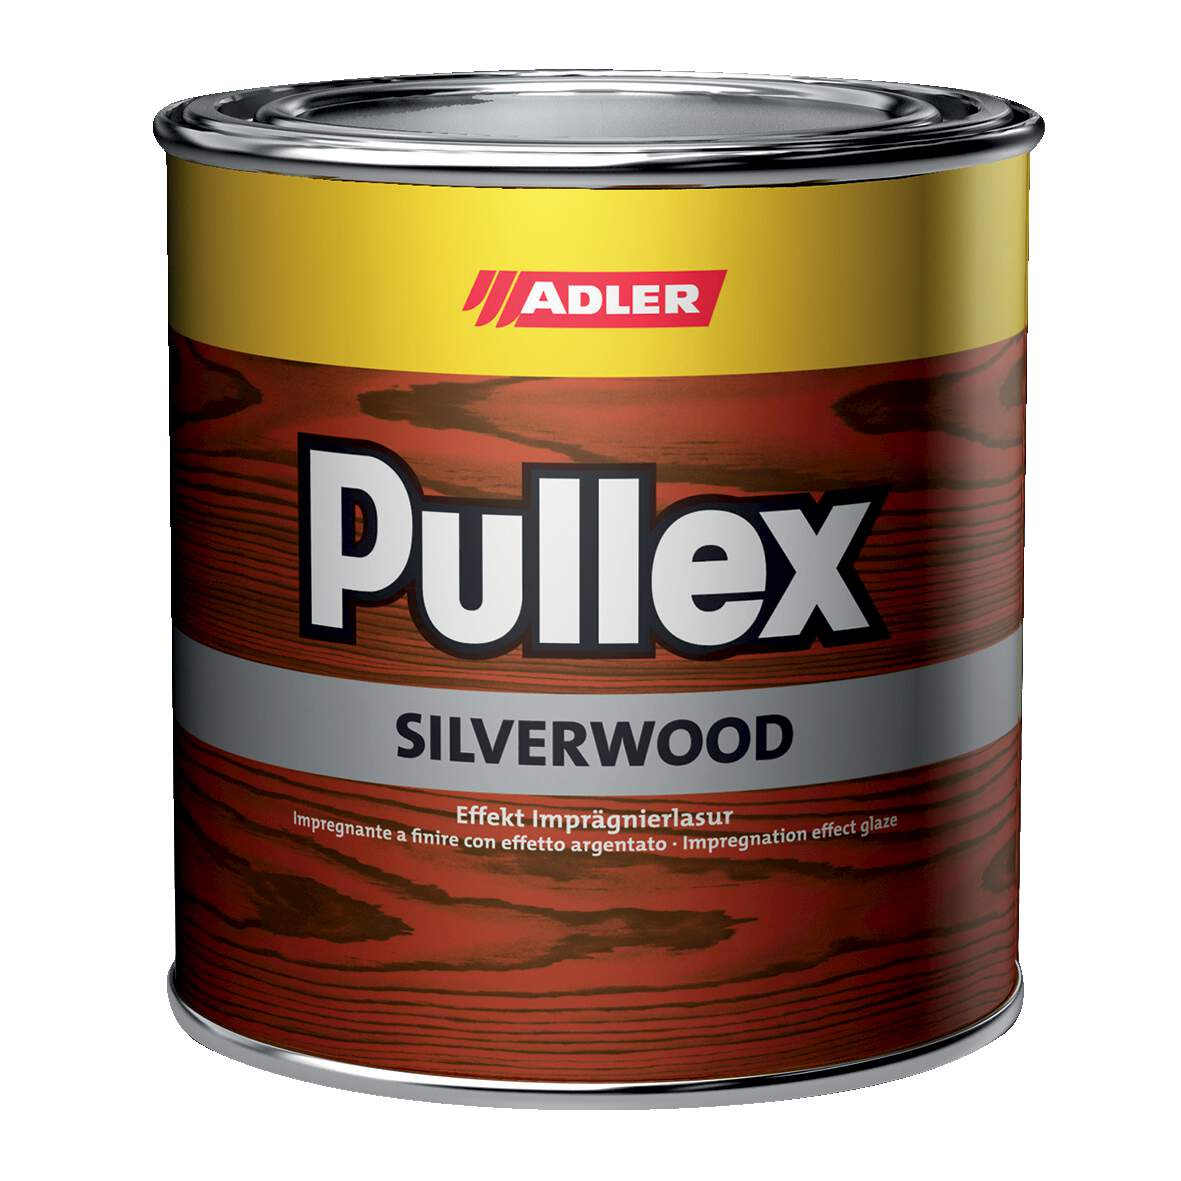 1095631 - Pullex-Silverwood